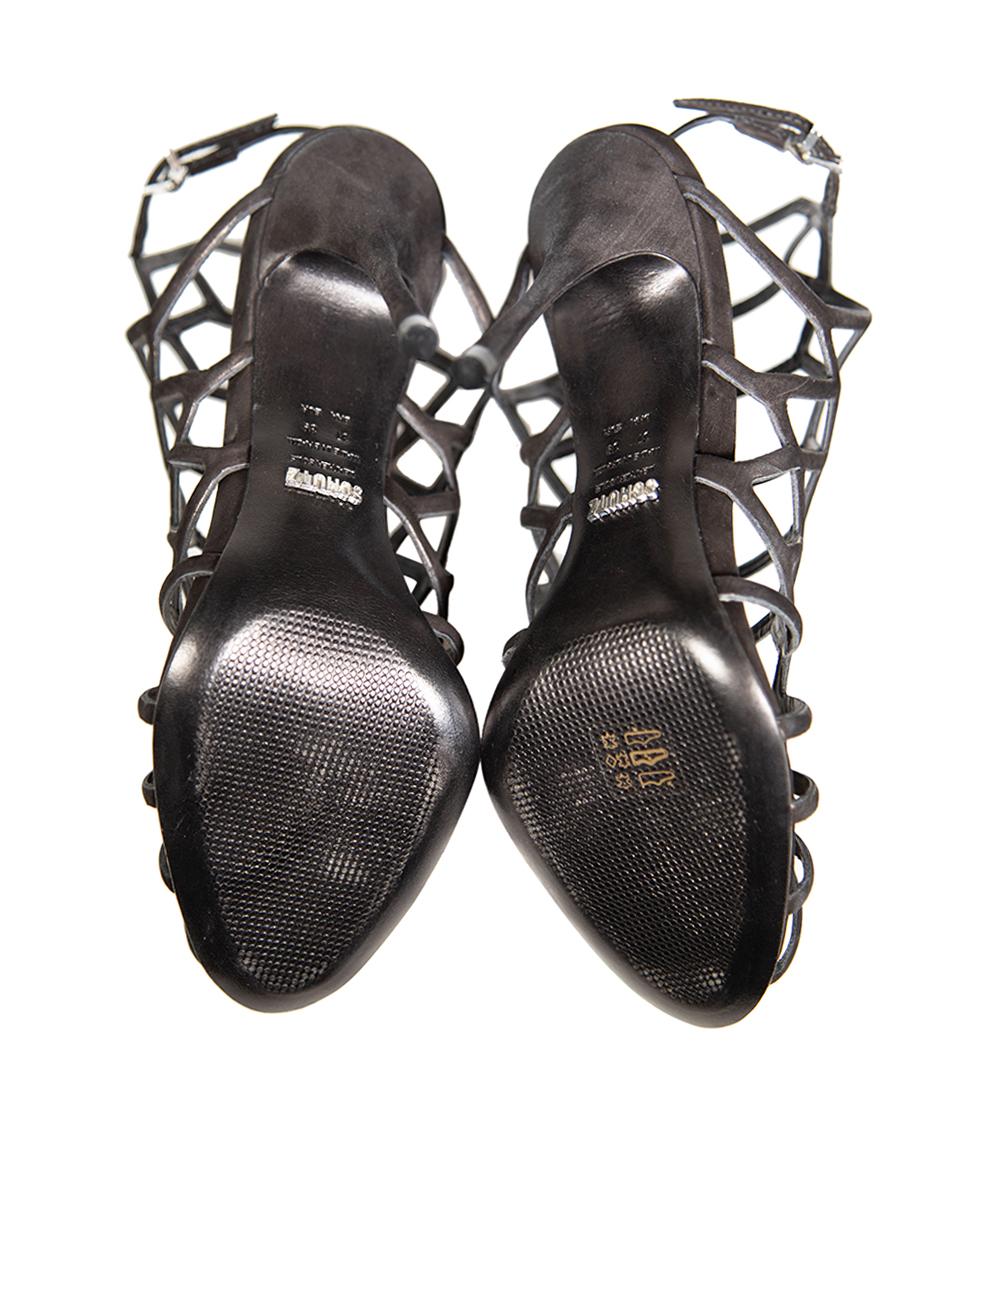 Women's Schutz Black Suede Cut Out Caged Heels Size EU 39 For Sale